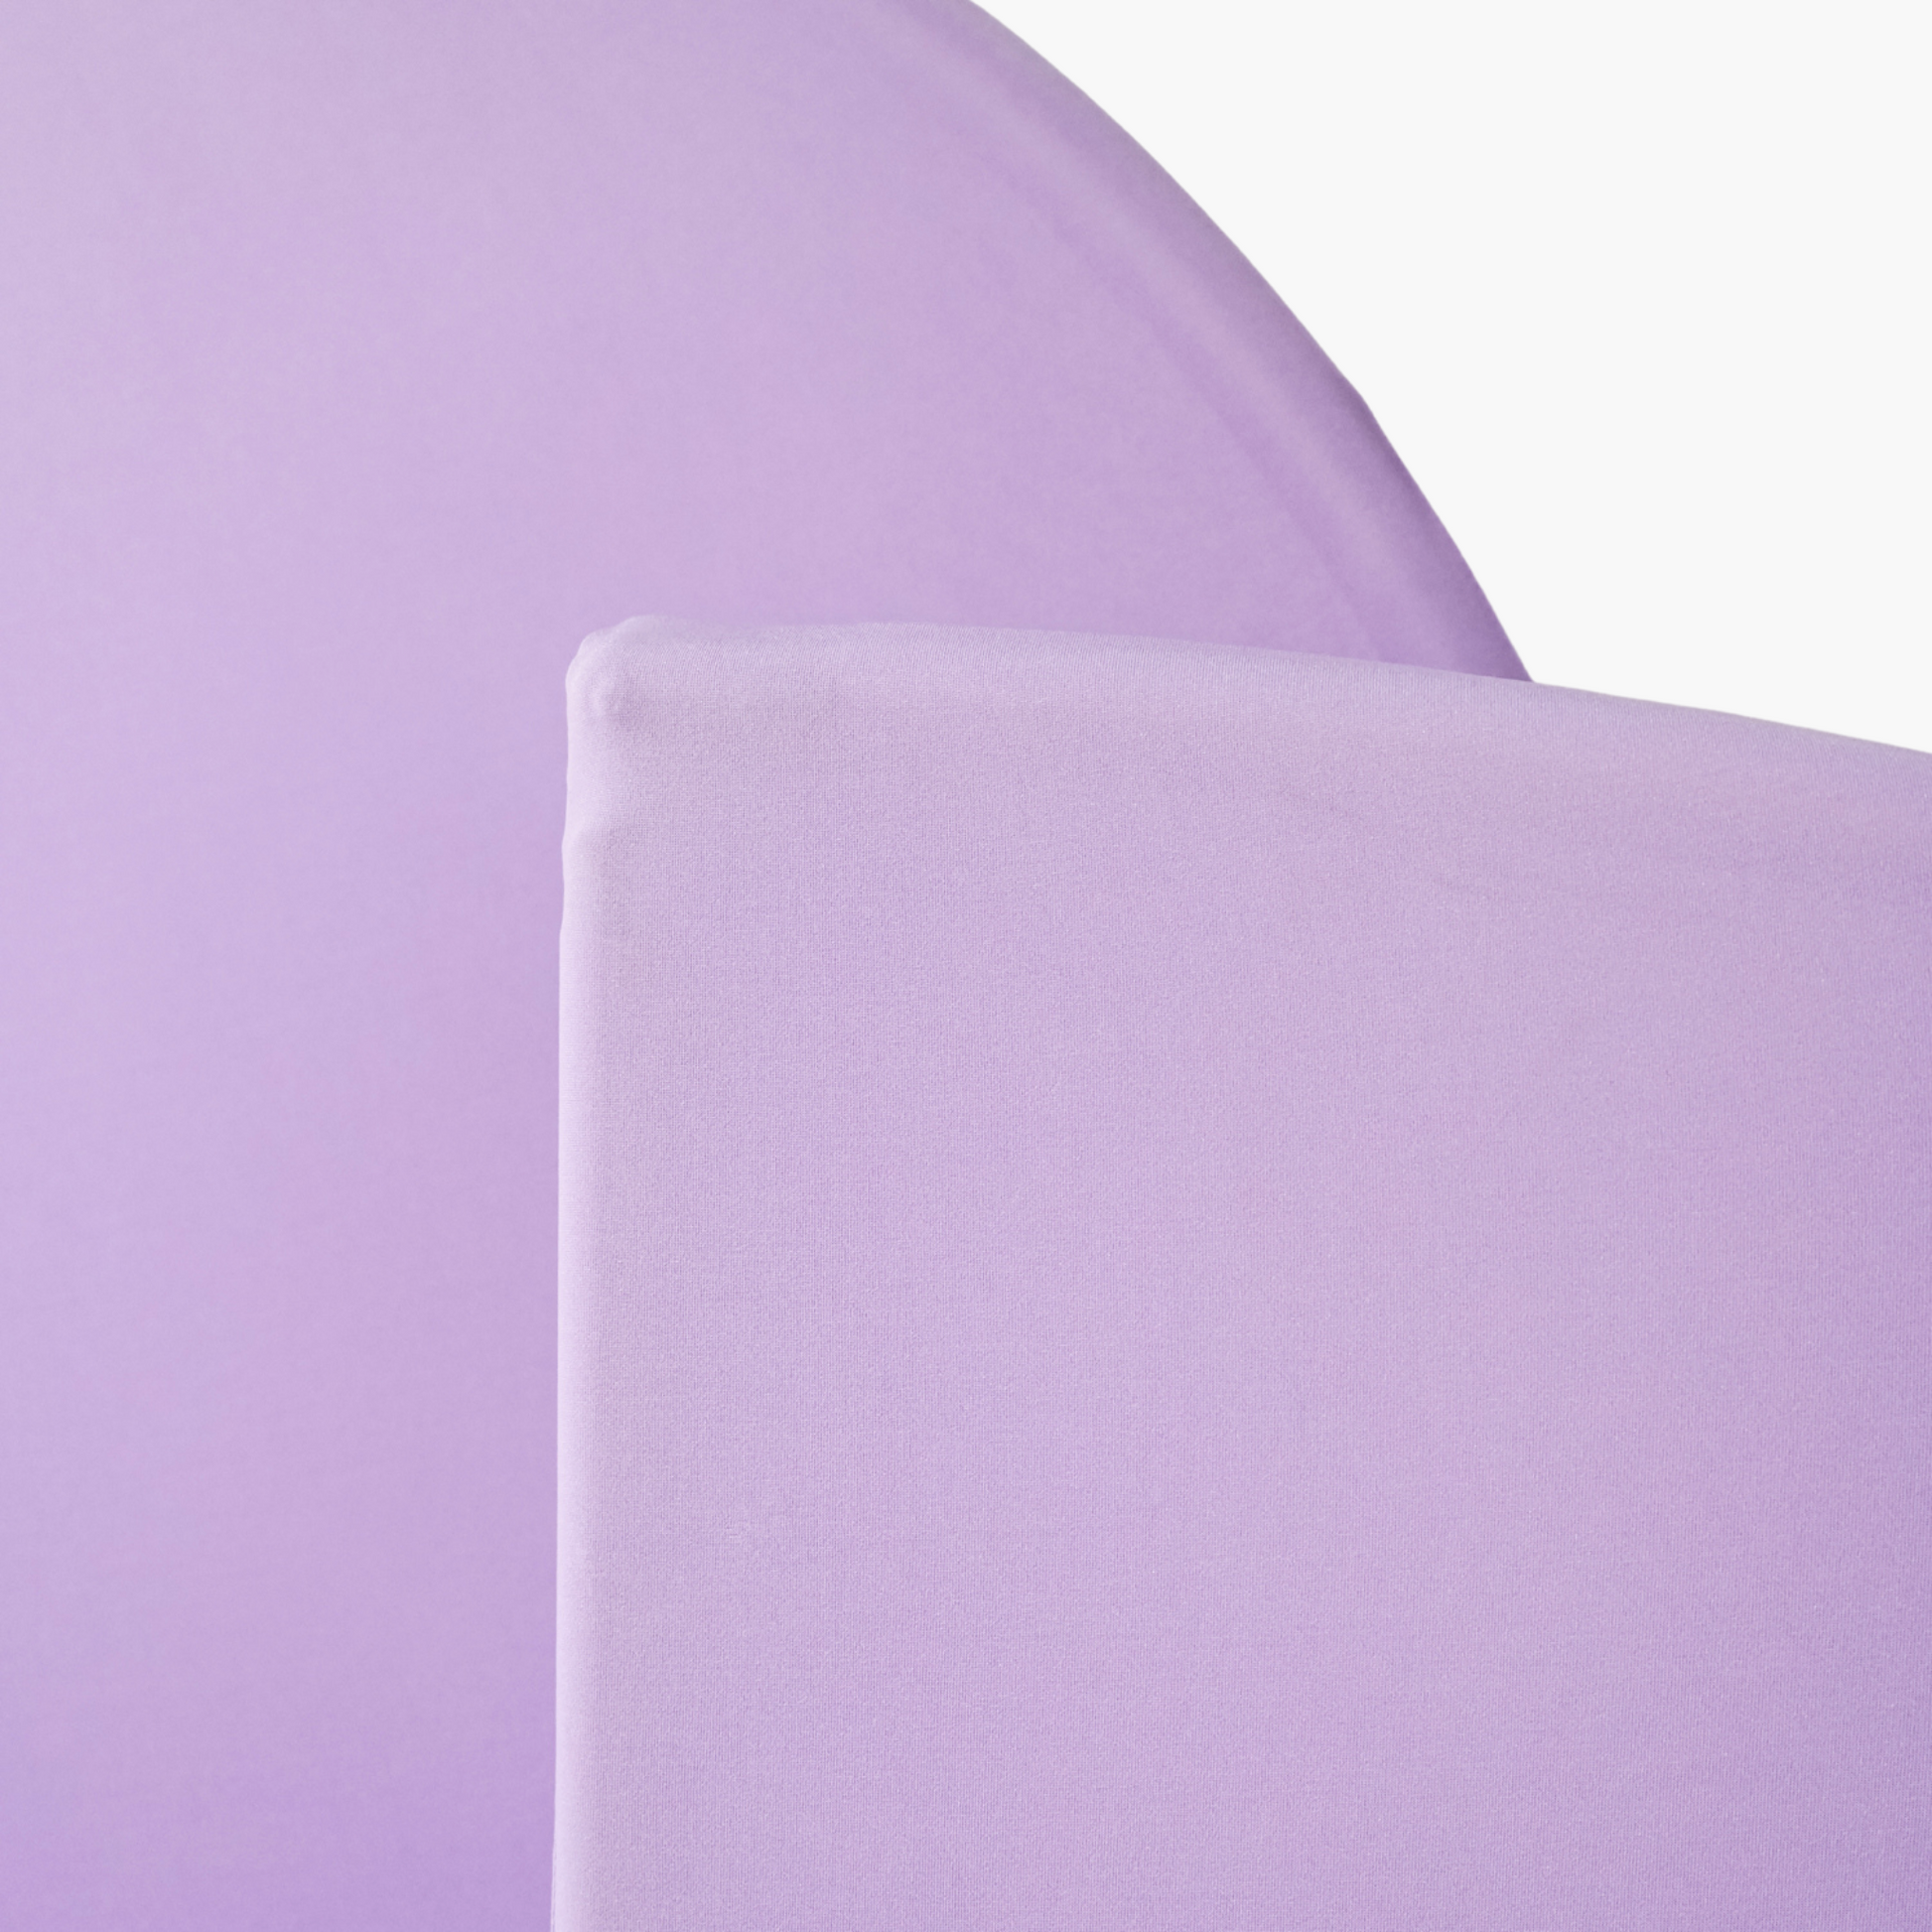 Spandex Arch Covers for Heavy Duty Chiara Frame Backdrop 3pc/set - Lavender